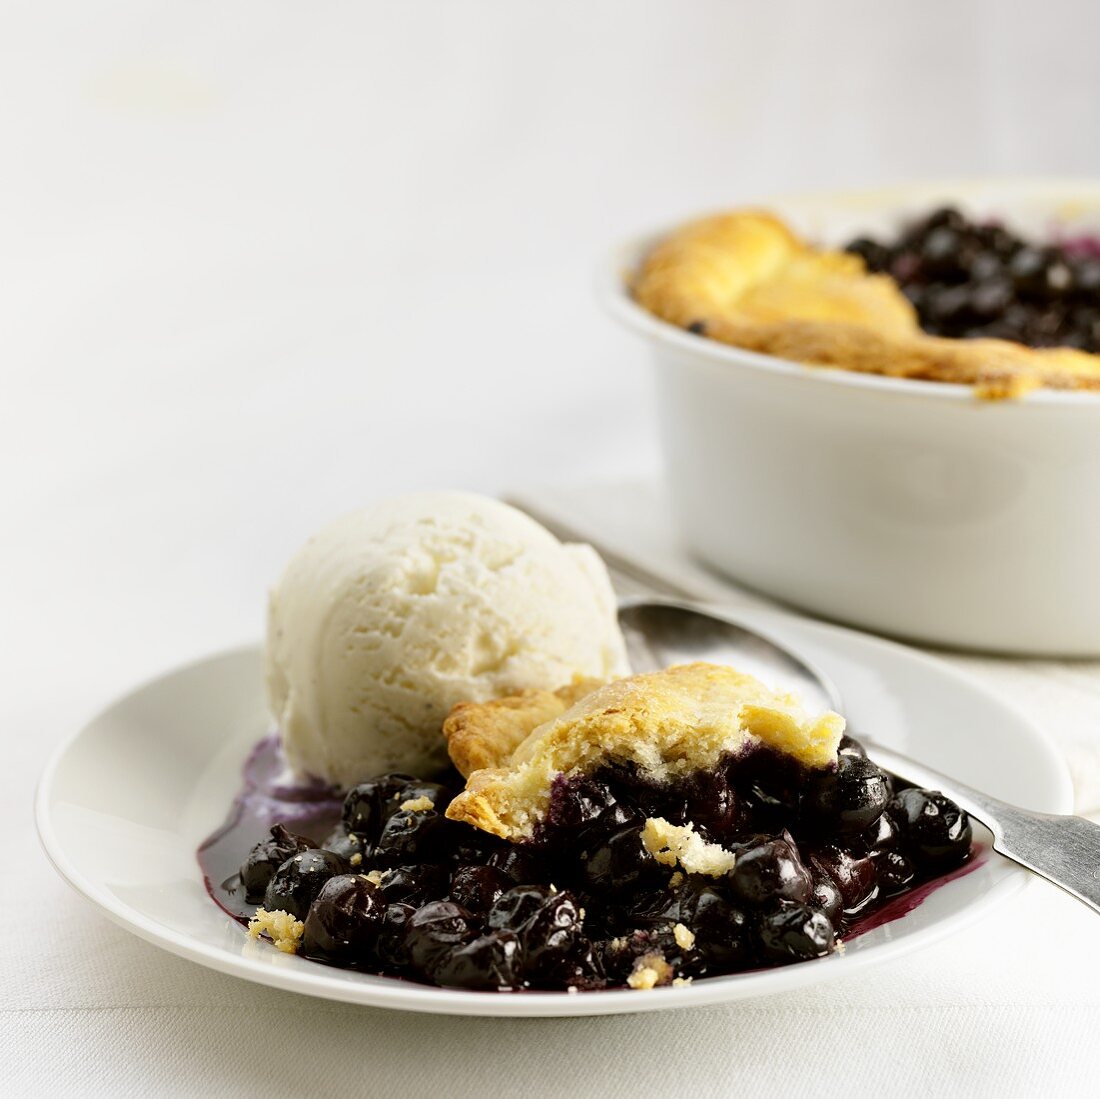 Blueberry pudding with vanilla ice cream